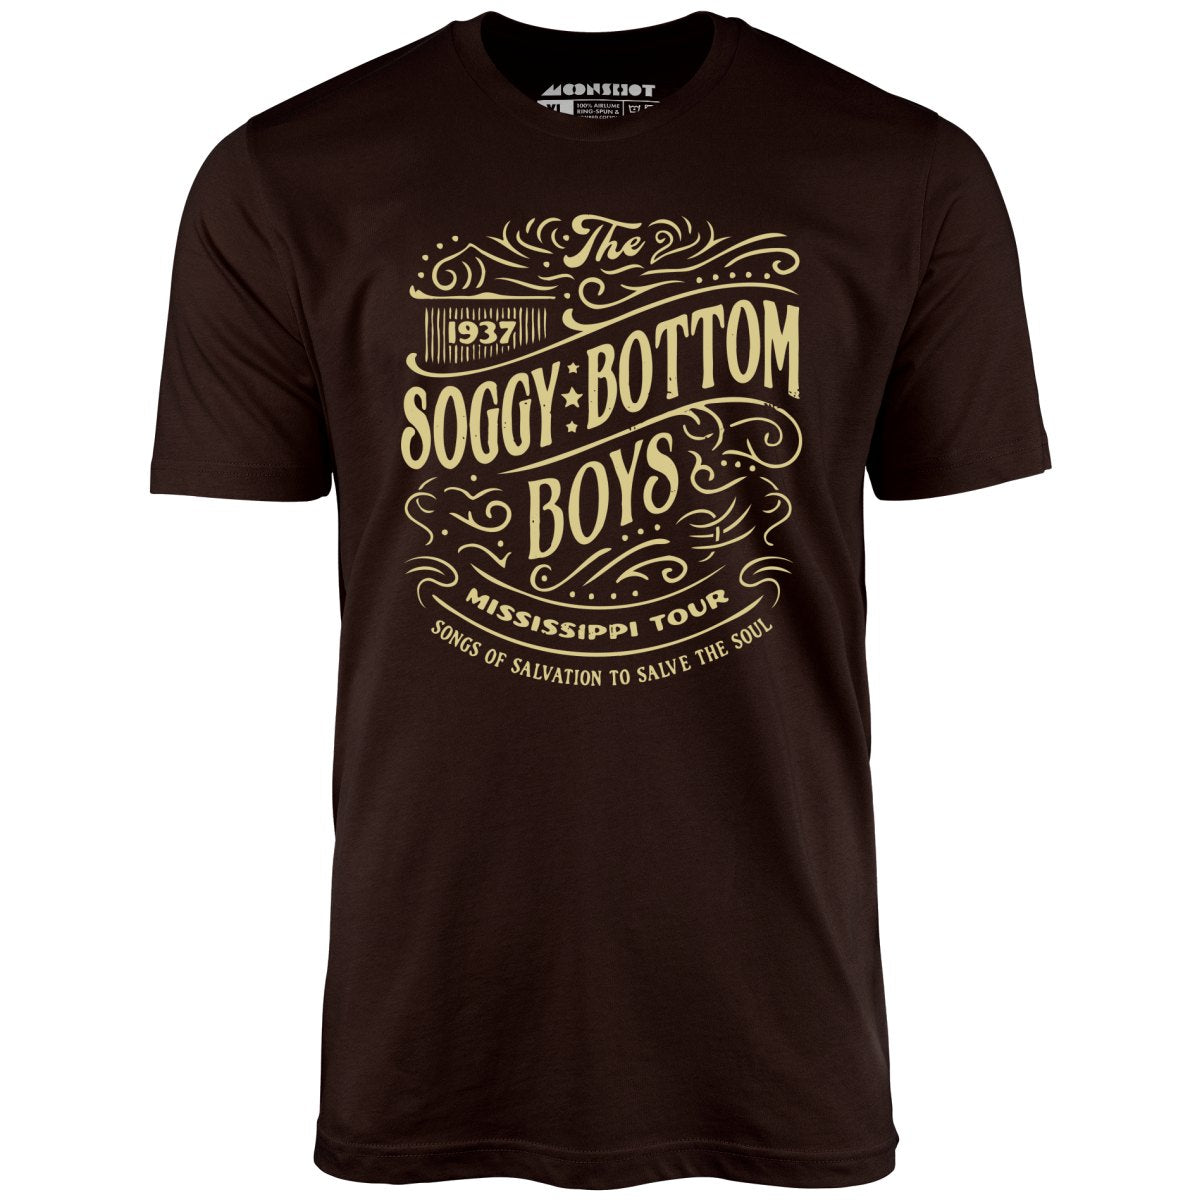 Soggy Bottom Boys - 1937 Mississippi Tour - Unisex T-Shirt